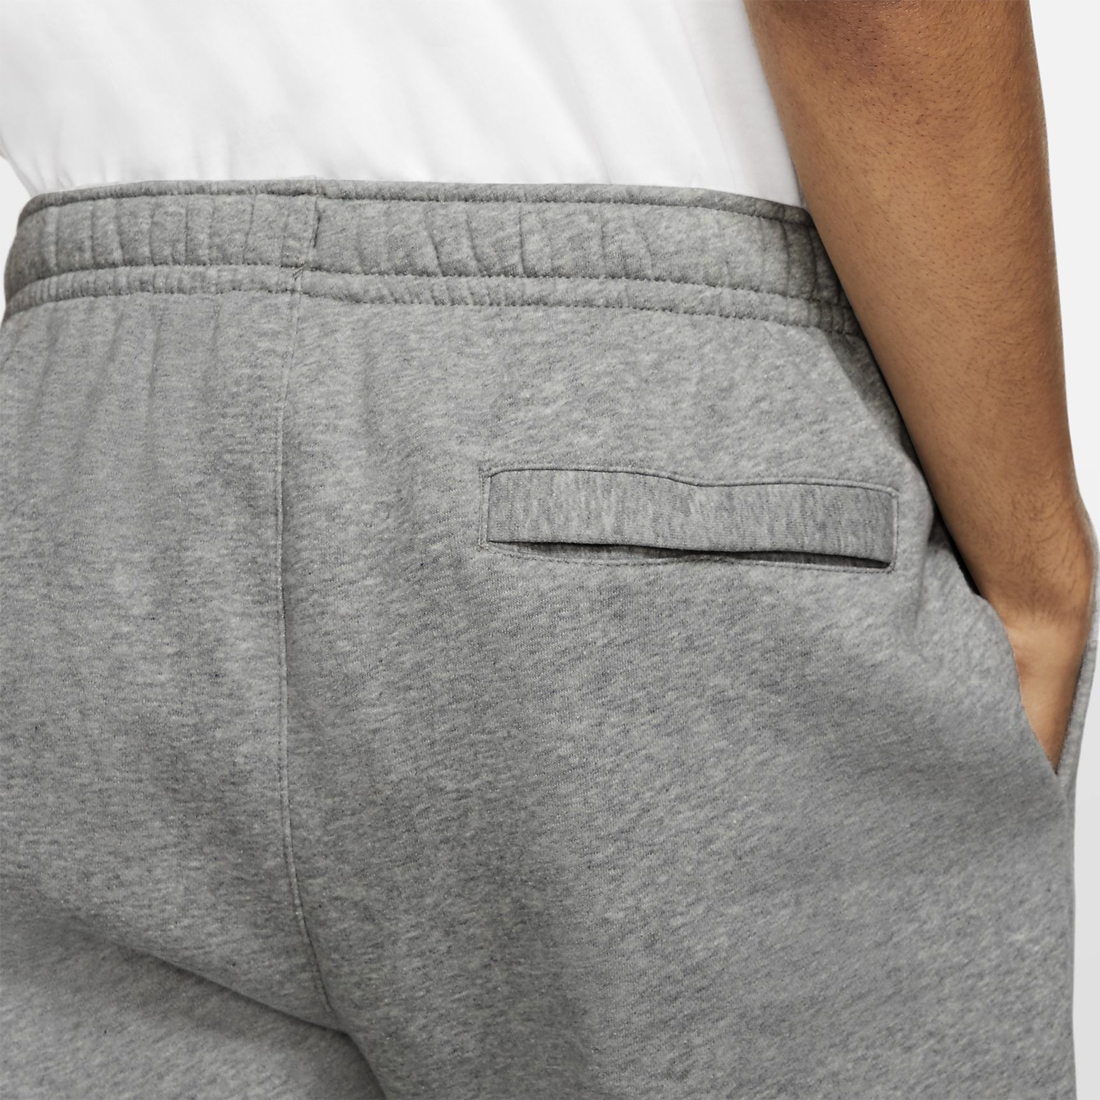 Nike Sportswear Club Fleece Jogger Pants Men - dark grey heather